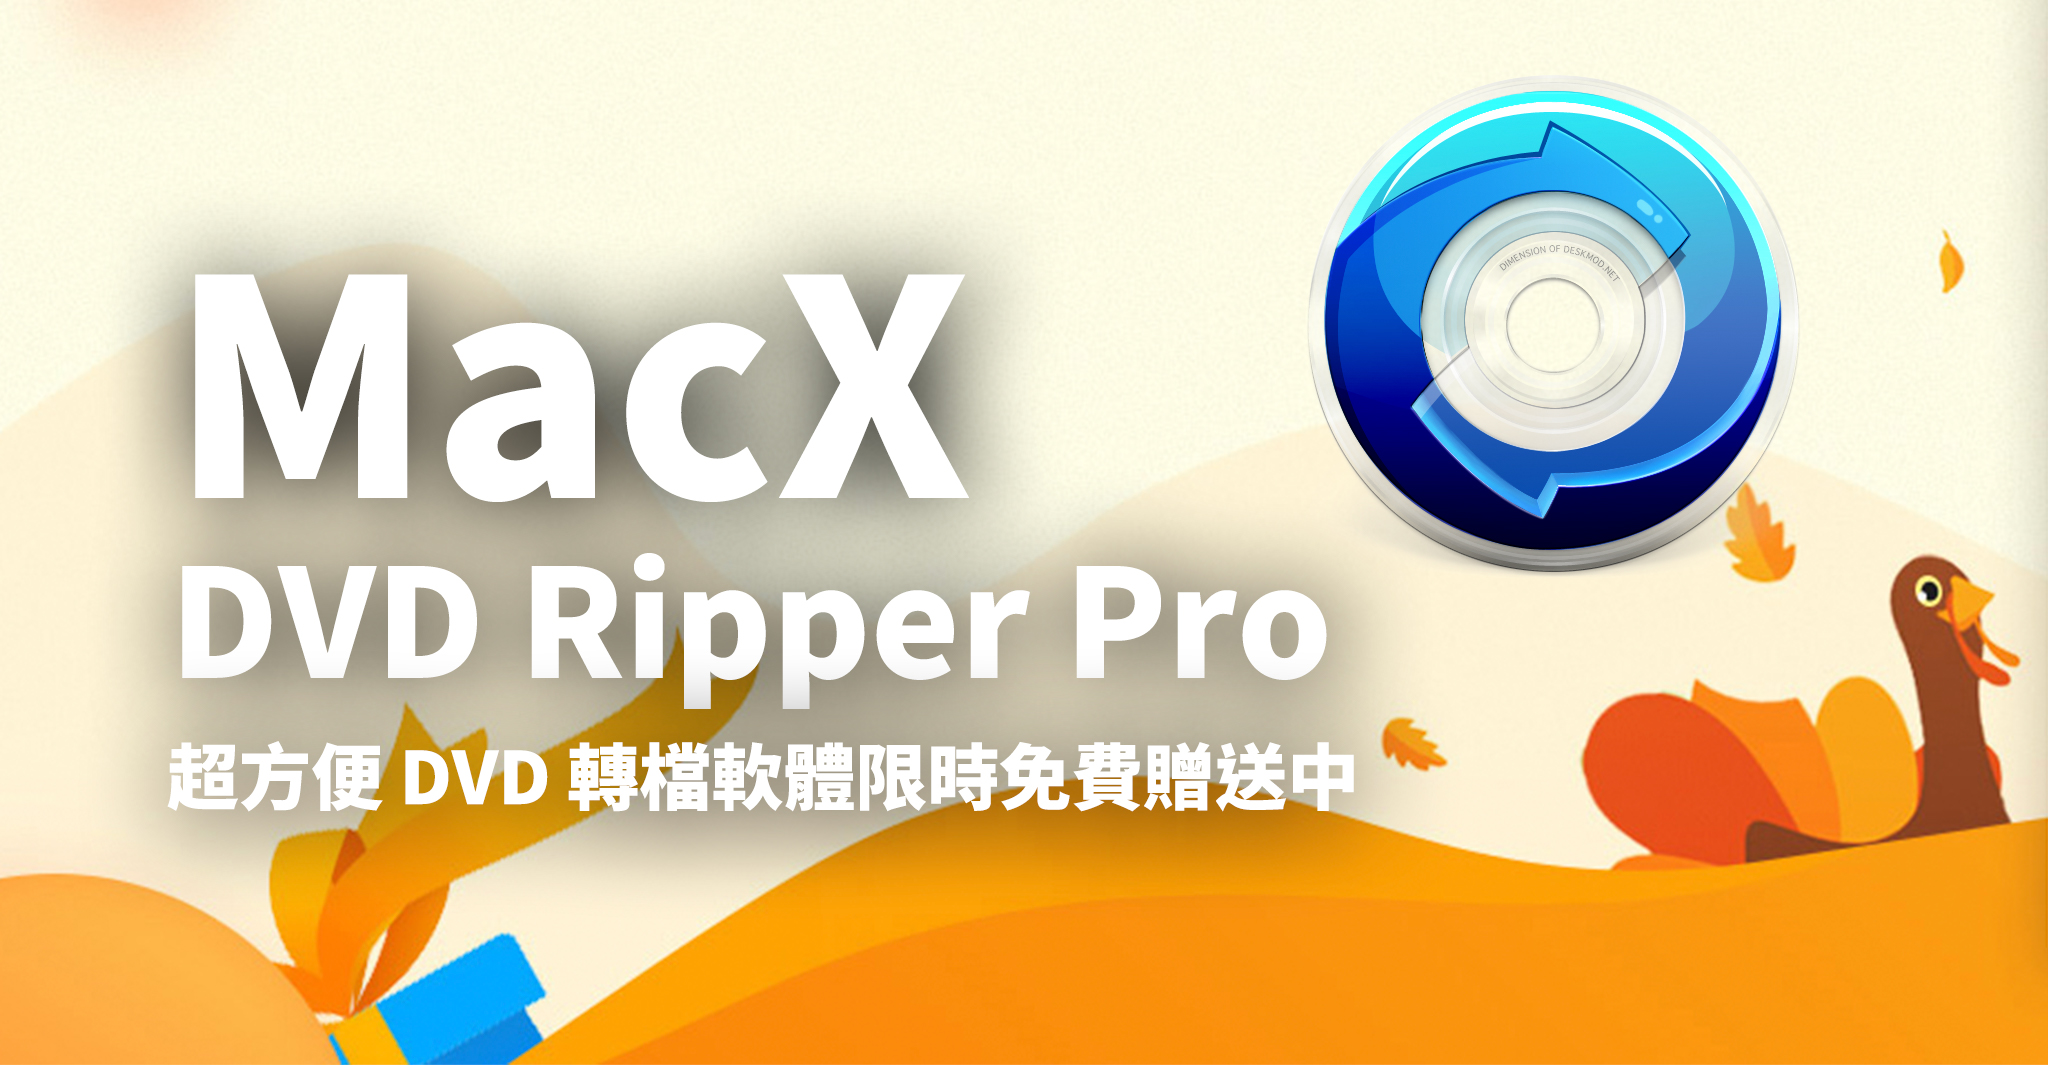 MacX DVD Ripper Pro、DVD 轉檔、限時免費